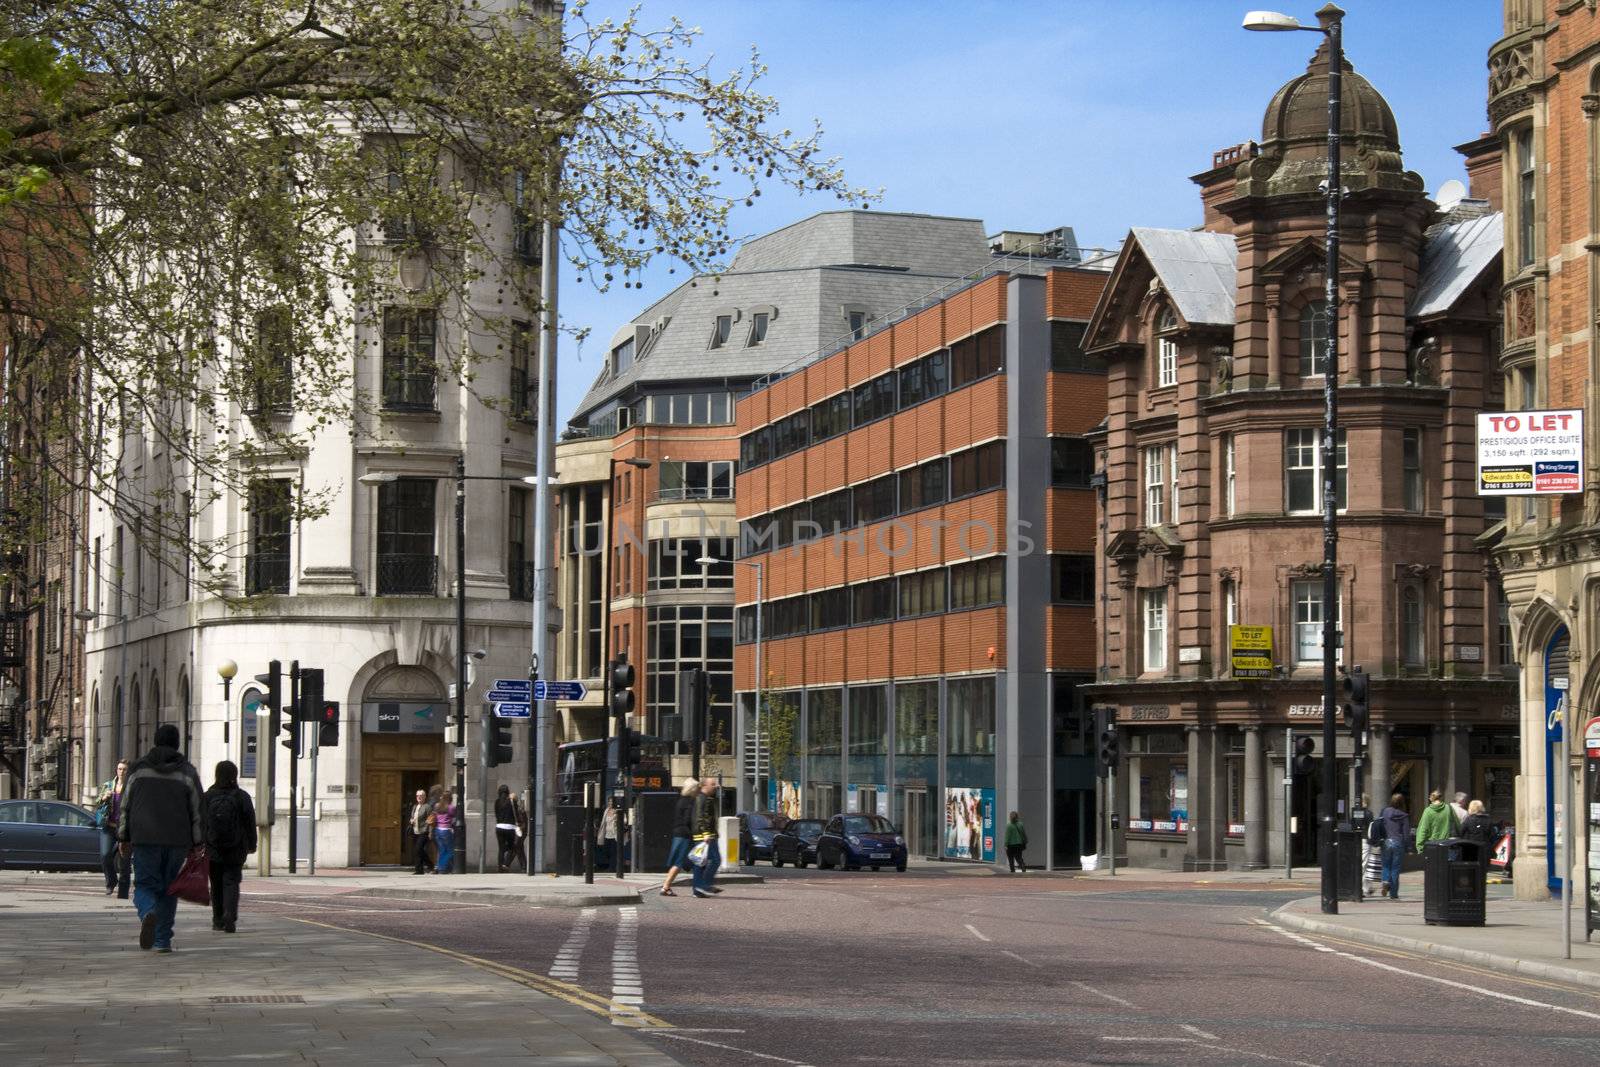 Manchester city center, Albert square and John Dalton Street